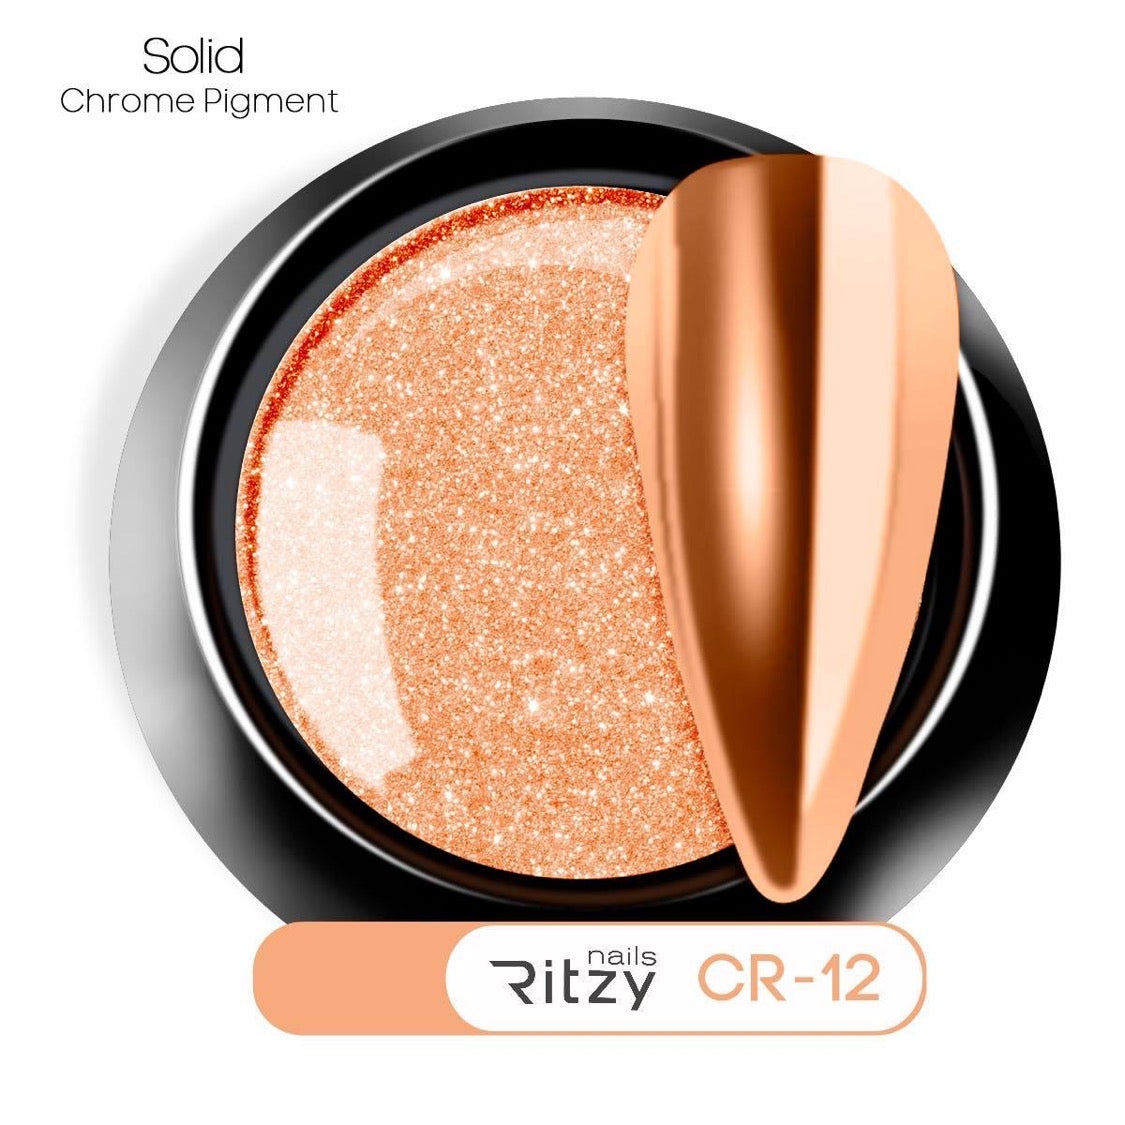 Chrome pigment CR-12